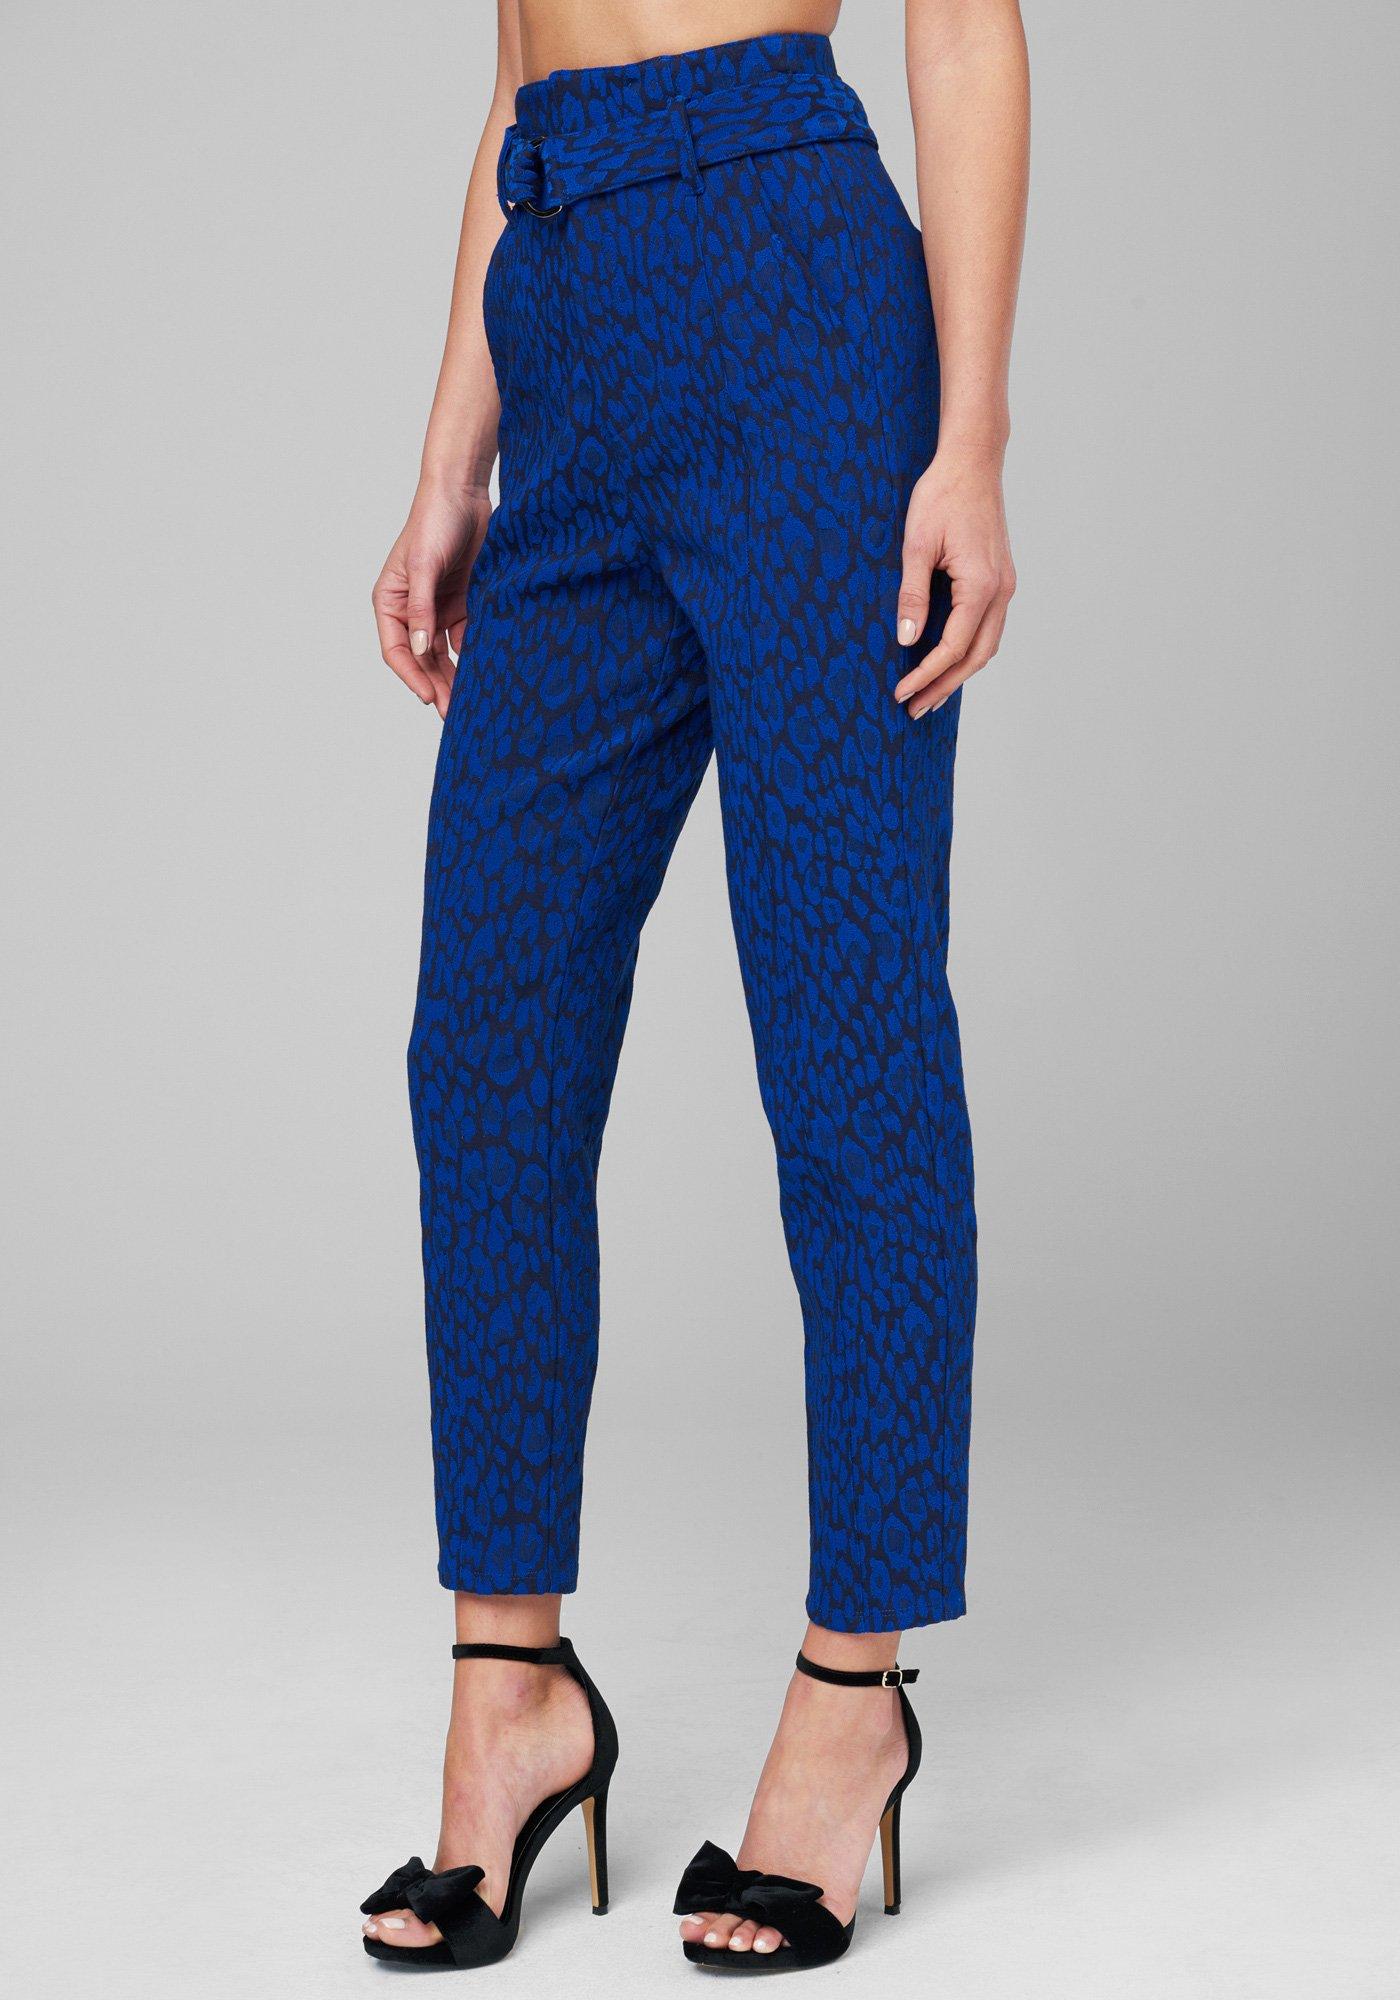 Bebe Cotton High Waist Leopard Crop Pants in Blue - Lyst